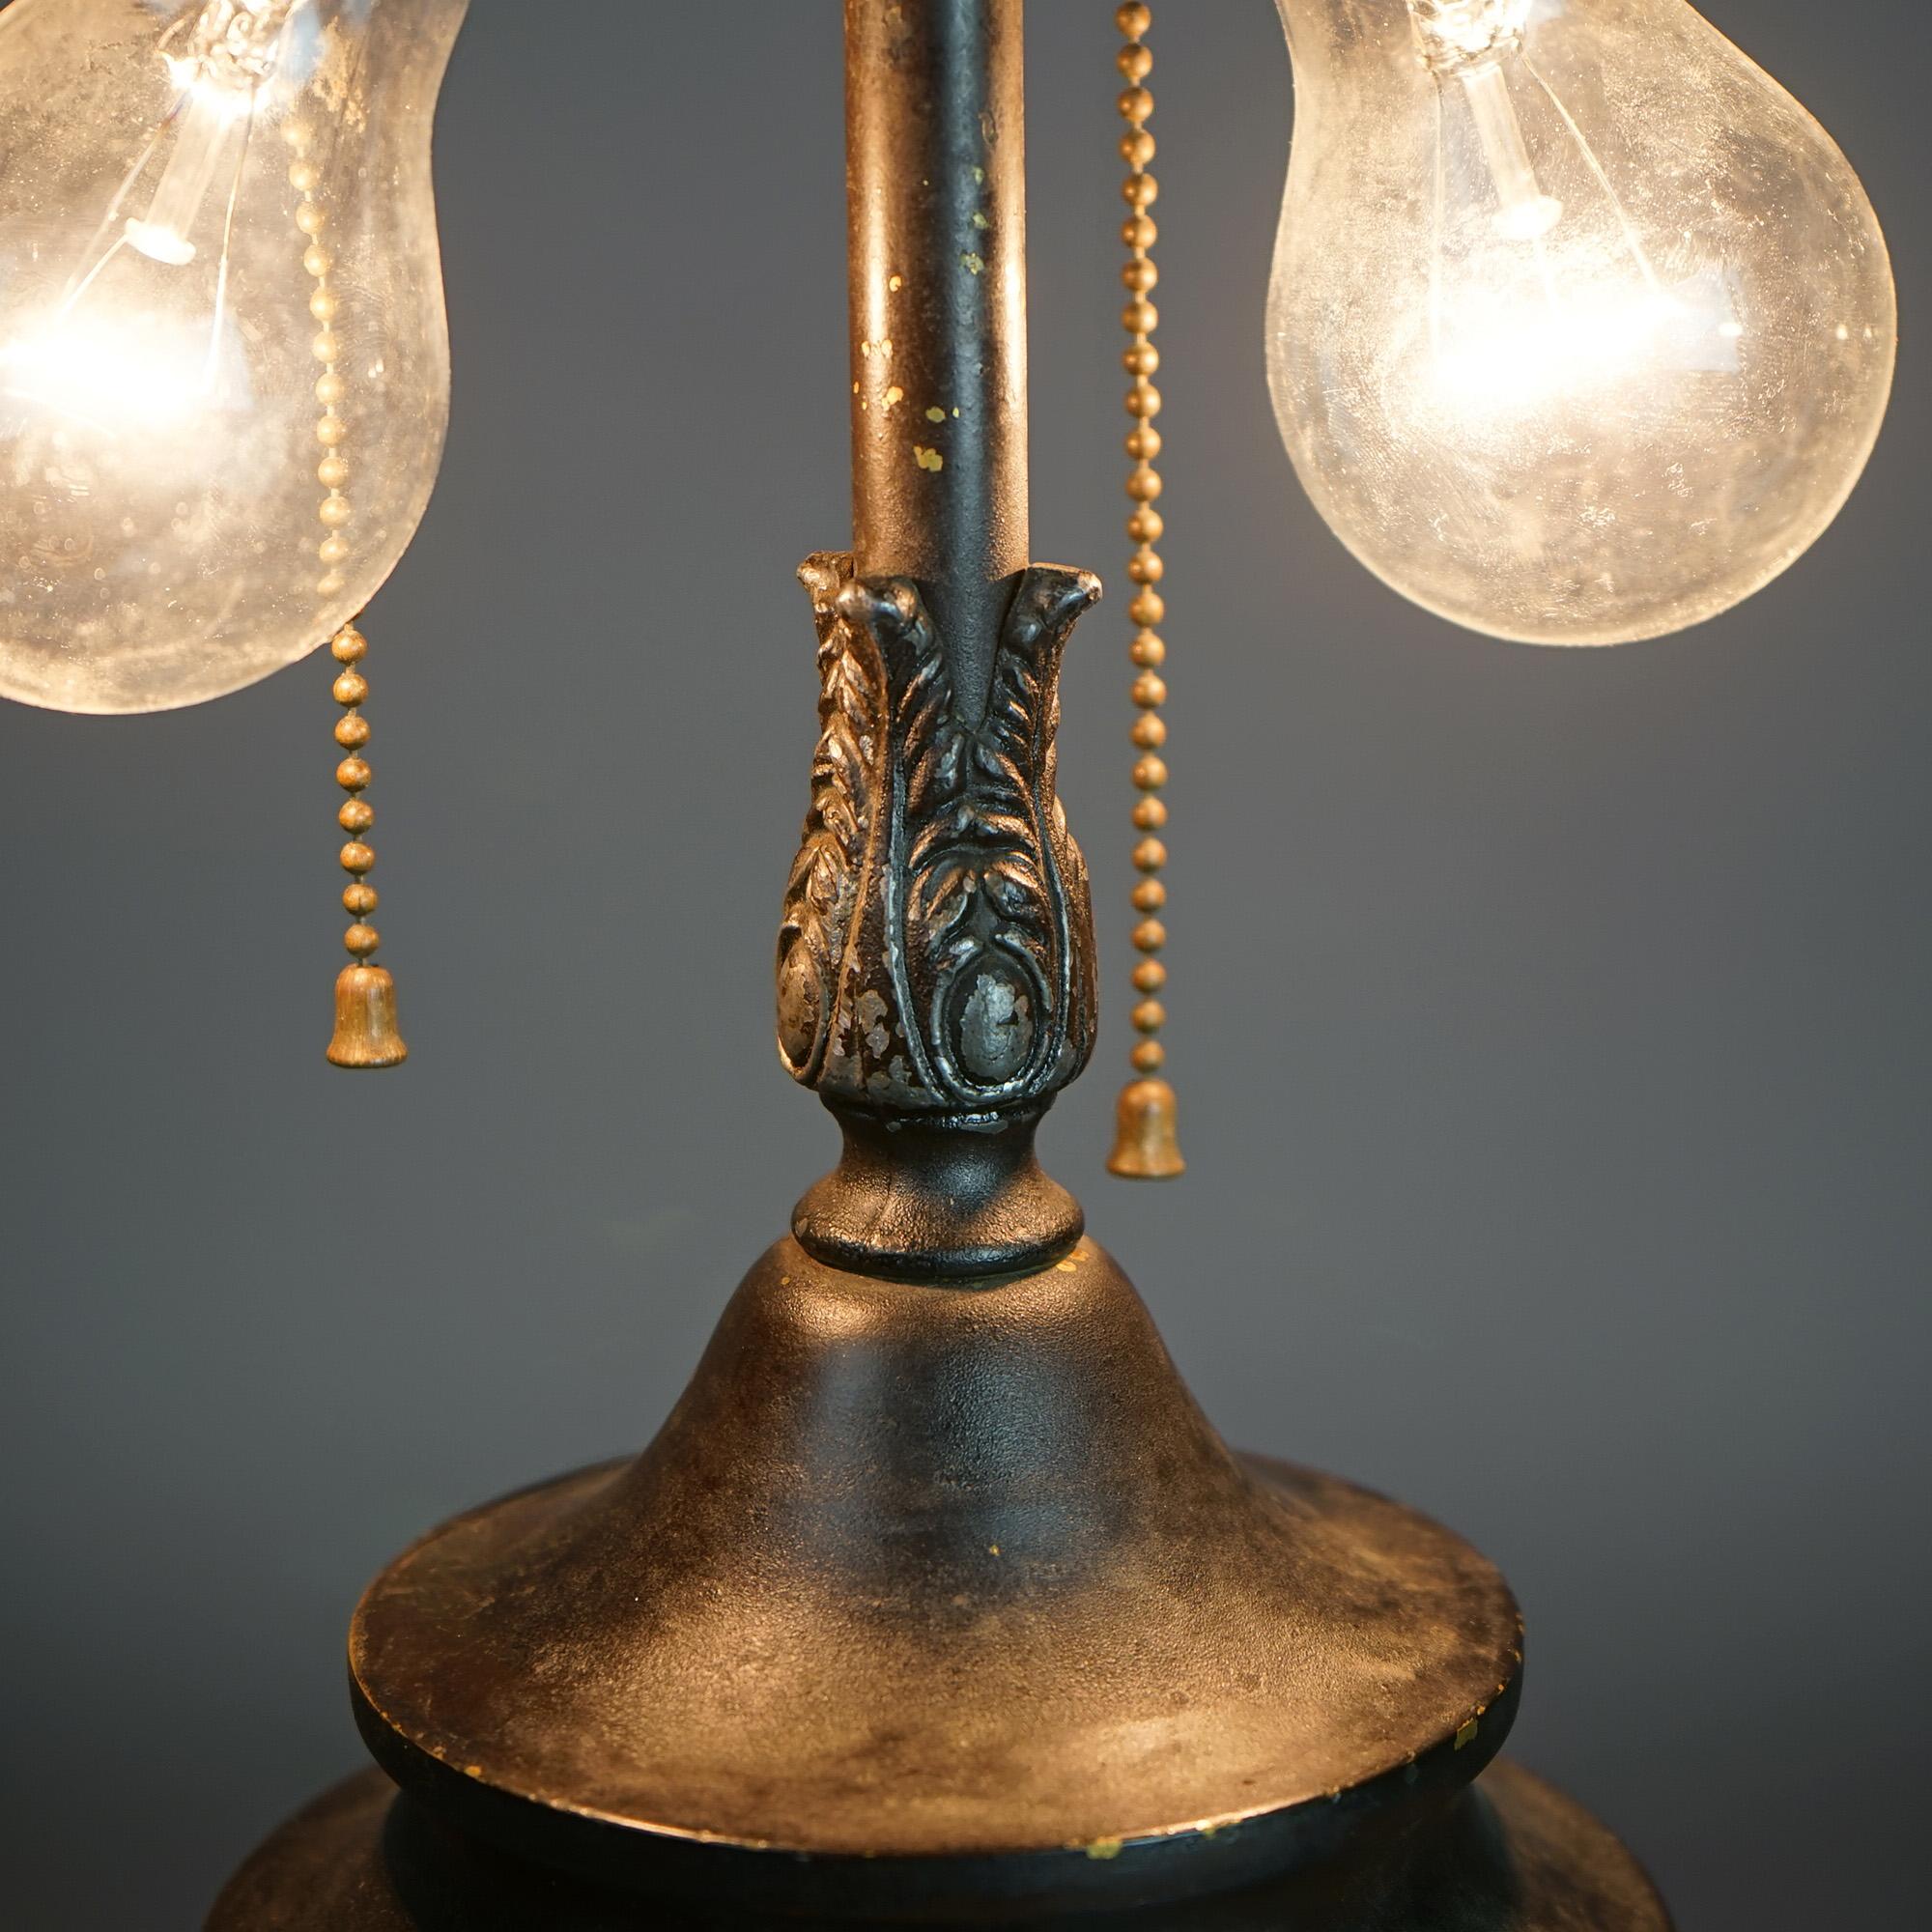 Metal Antique Arts & Crafts Egyptian Revival Bradley &Hubbard School Slag Glass Lamp